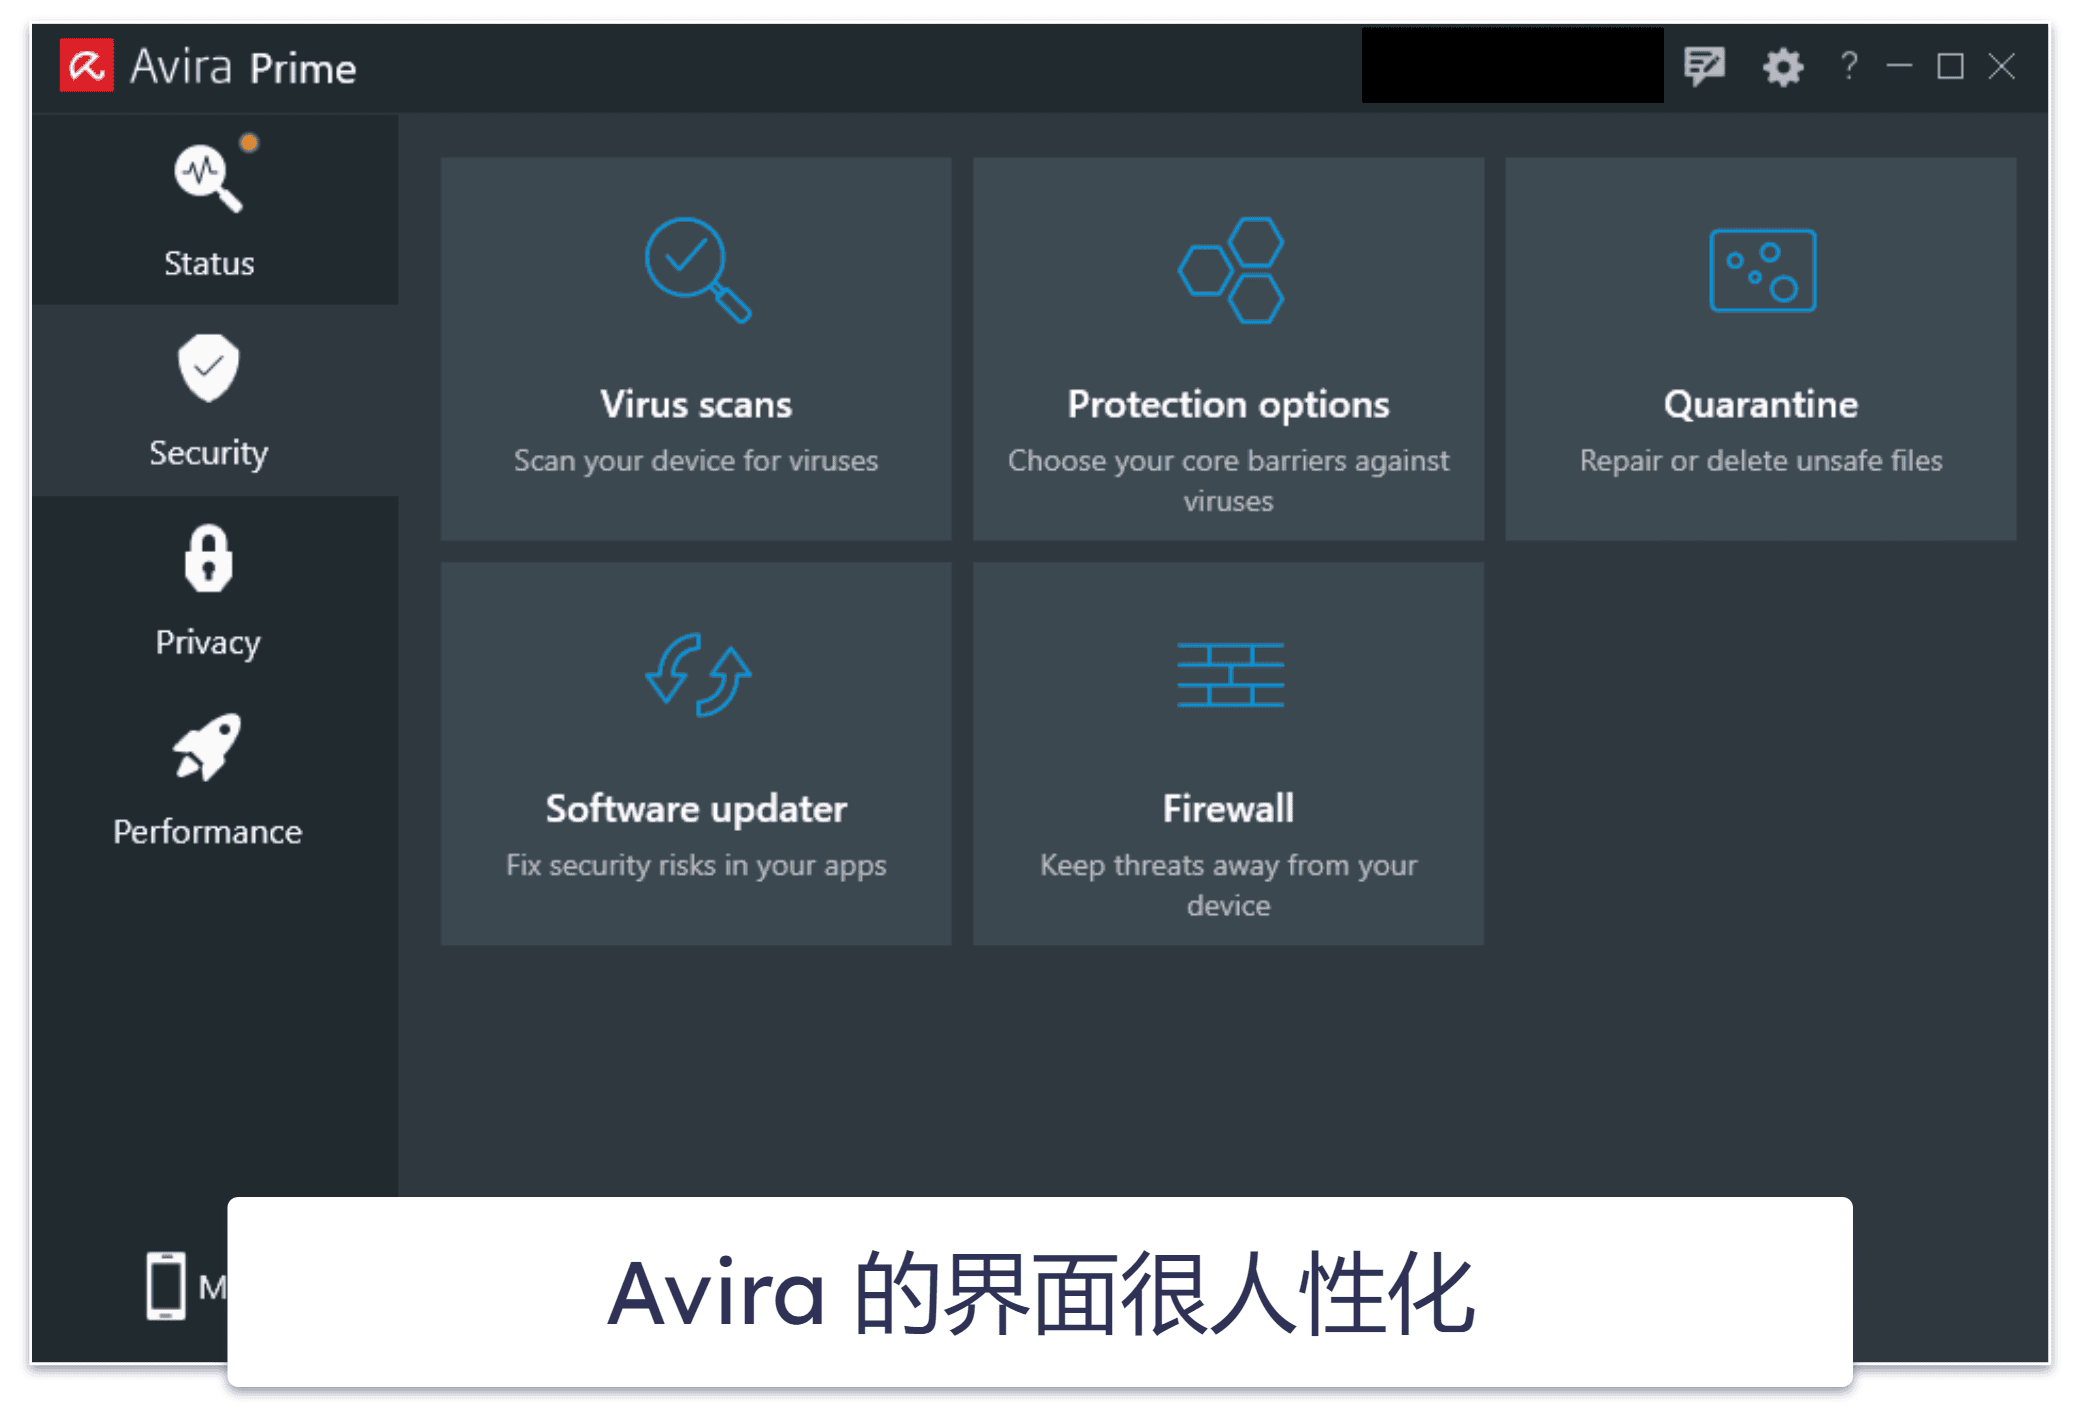 7. Avira Free Security for Windows：基于云的高级恶意软件扫描器 + 系统清理功能